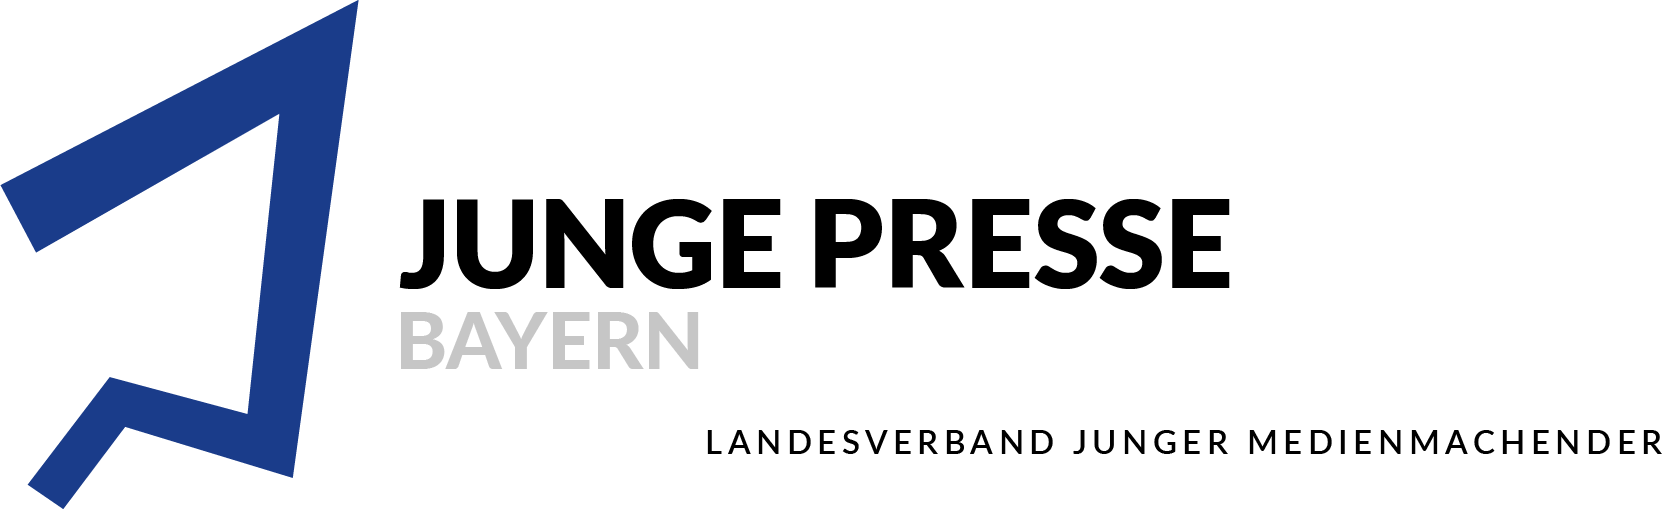 Junge Presse Bayern e.V.